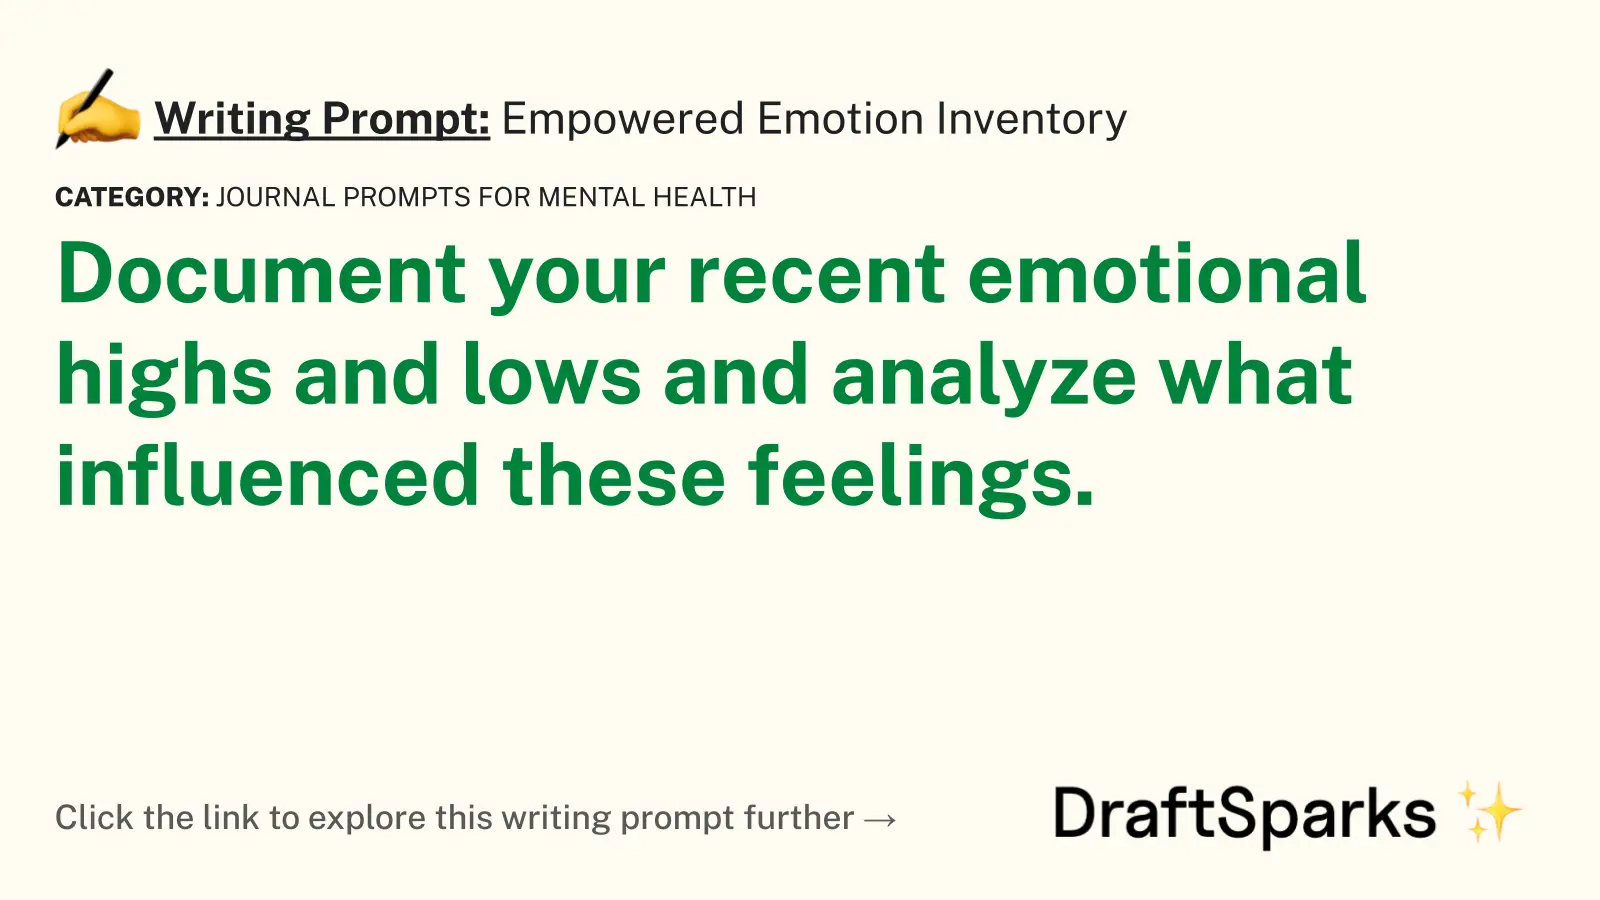 Empowered Emotion Inventory